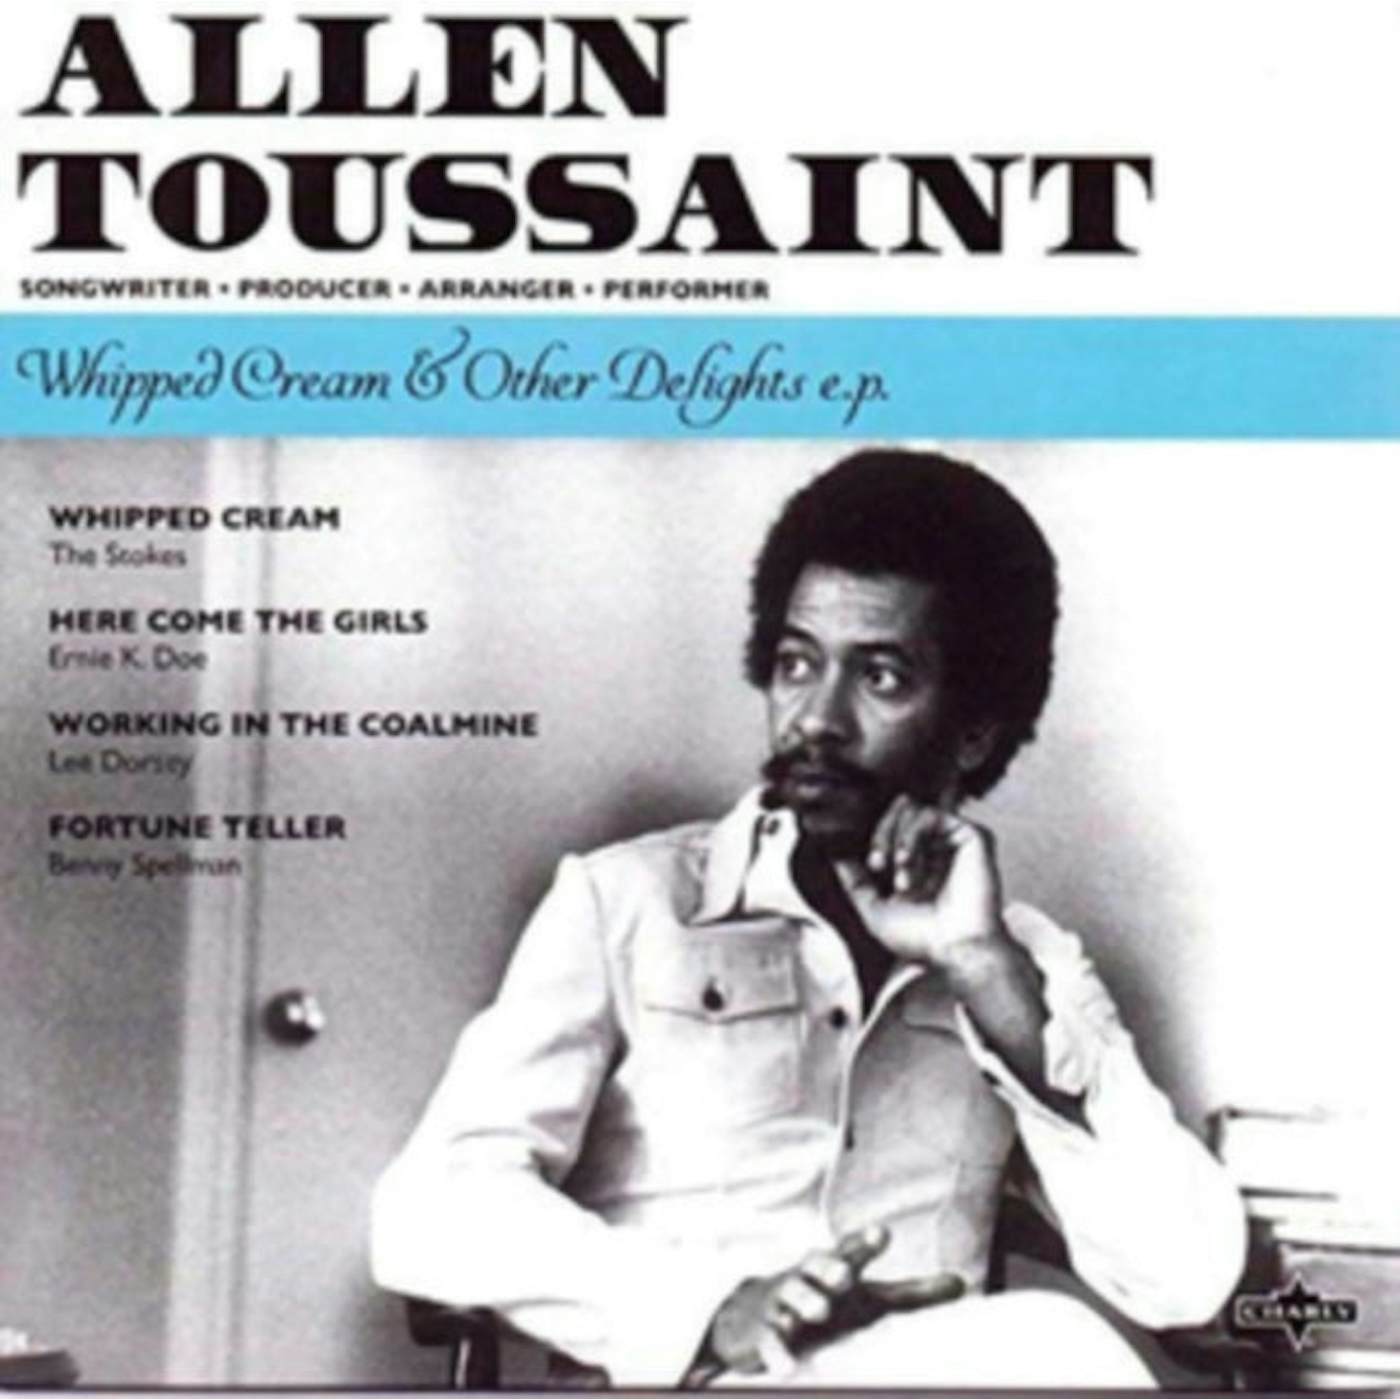 Allen Toussaint LP - Whipped Cream & Other Delights (Vinyl)